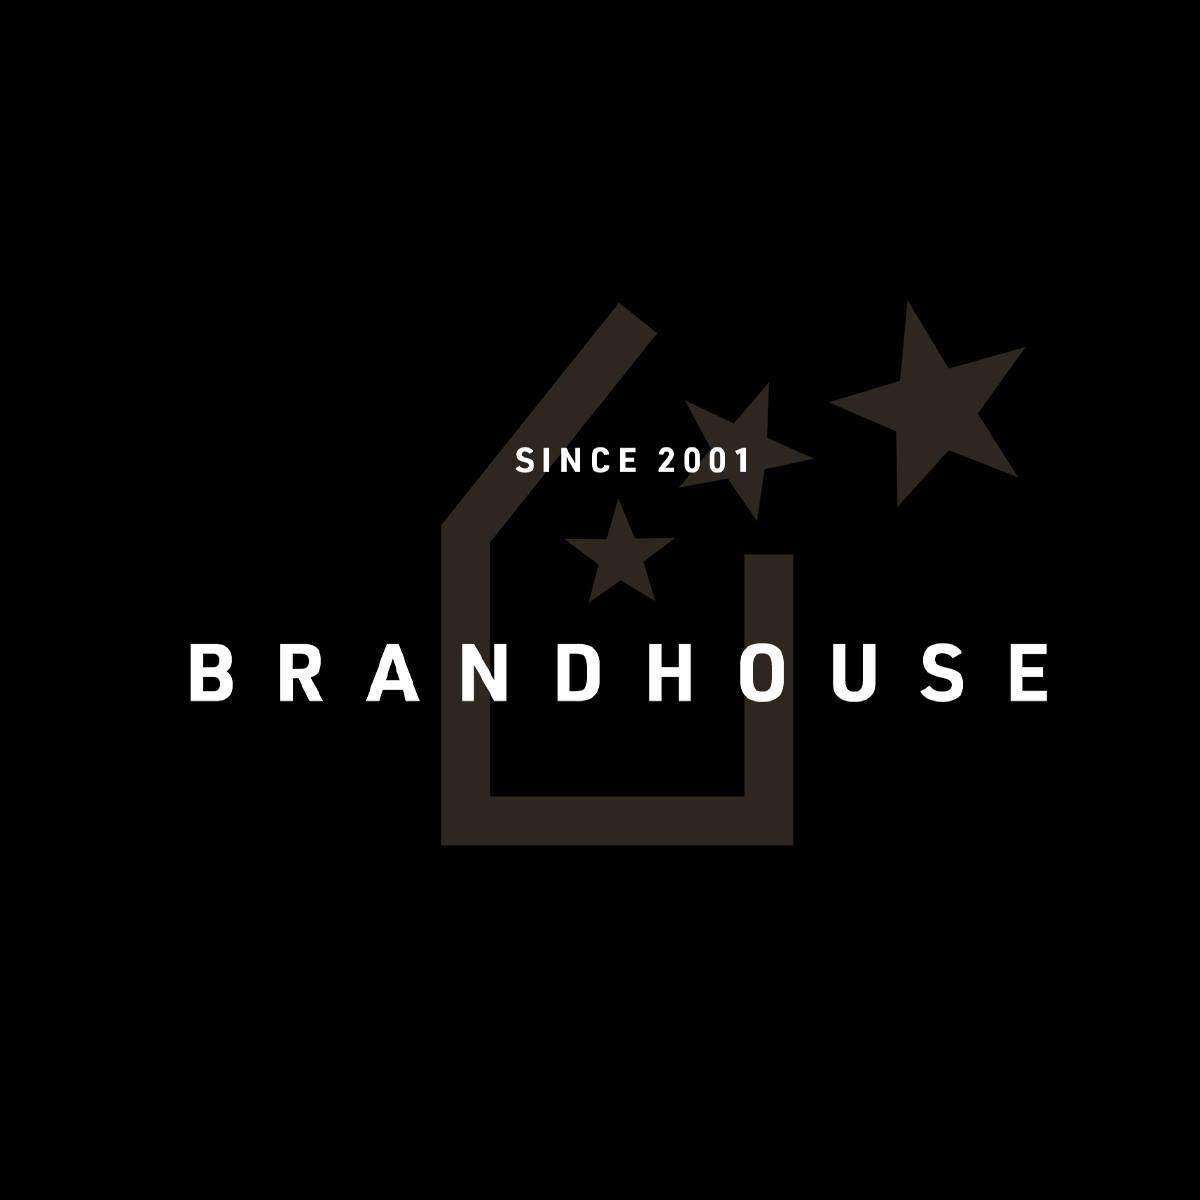 Brandhouse